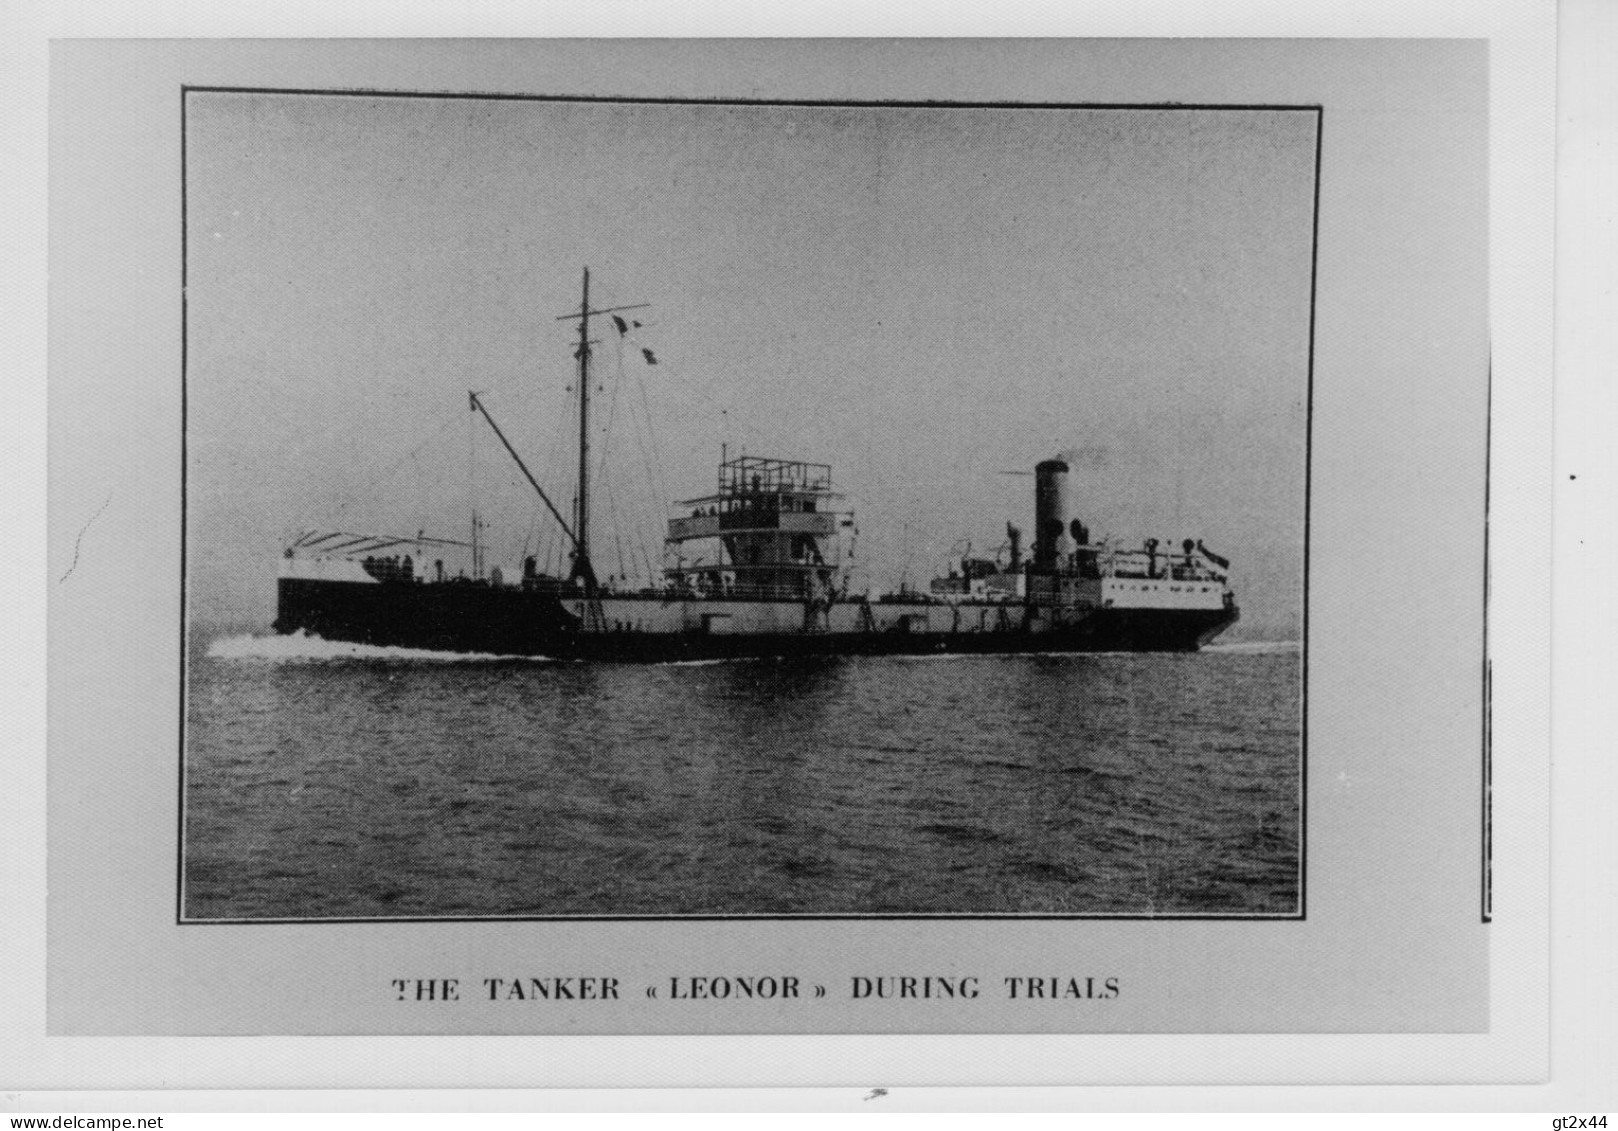 LEONOR During Trials  11/1928 ===SPRAMEX  ---repro--- - Tankers